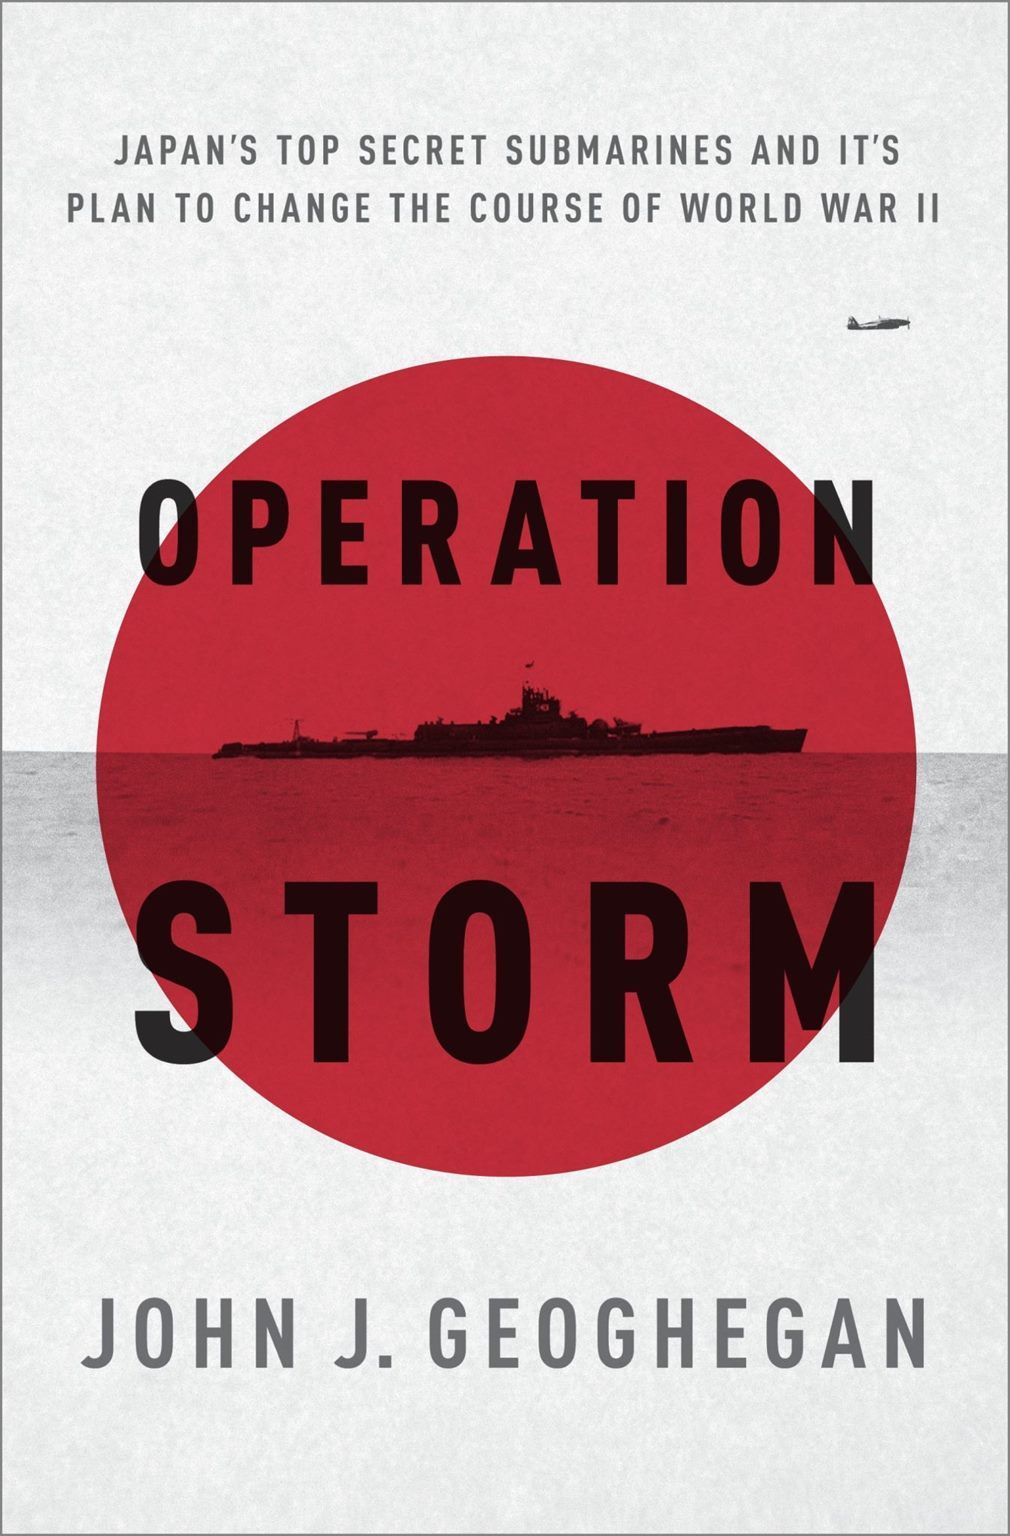 OPERATION STORM Japan's Top Secret Submarines of WW2